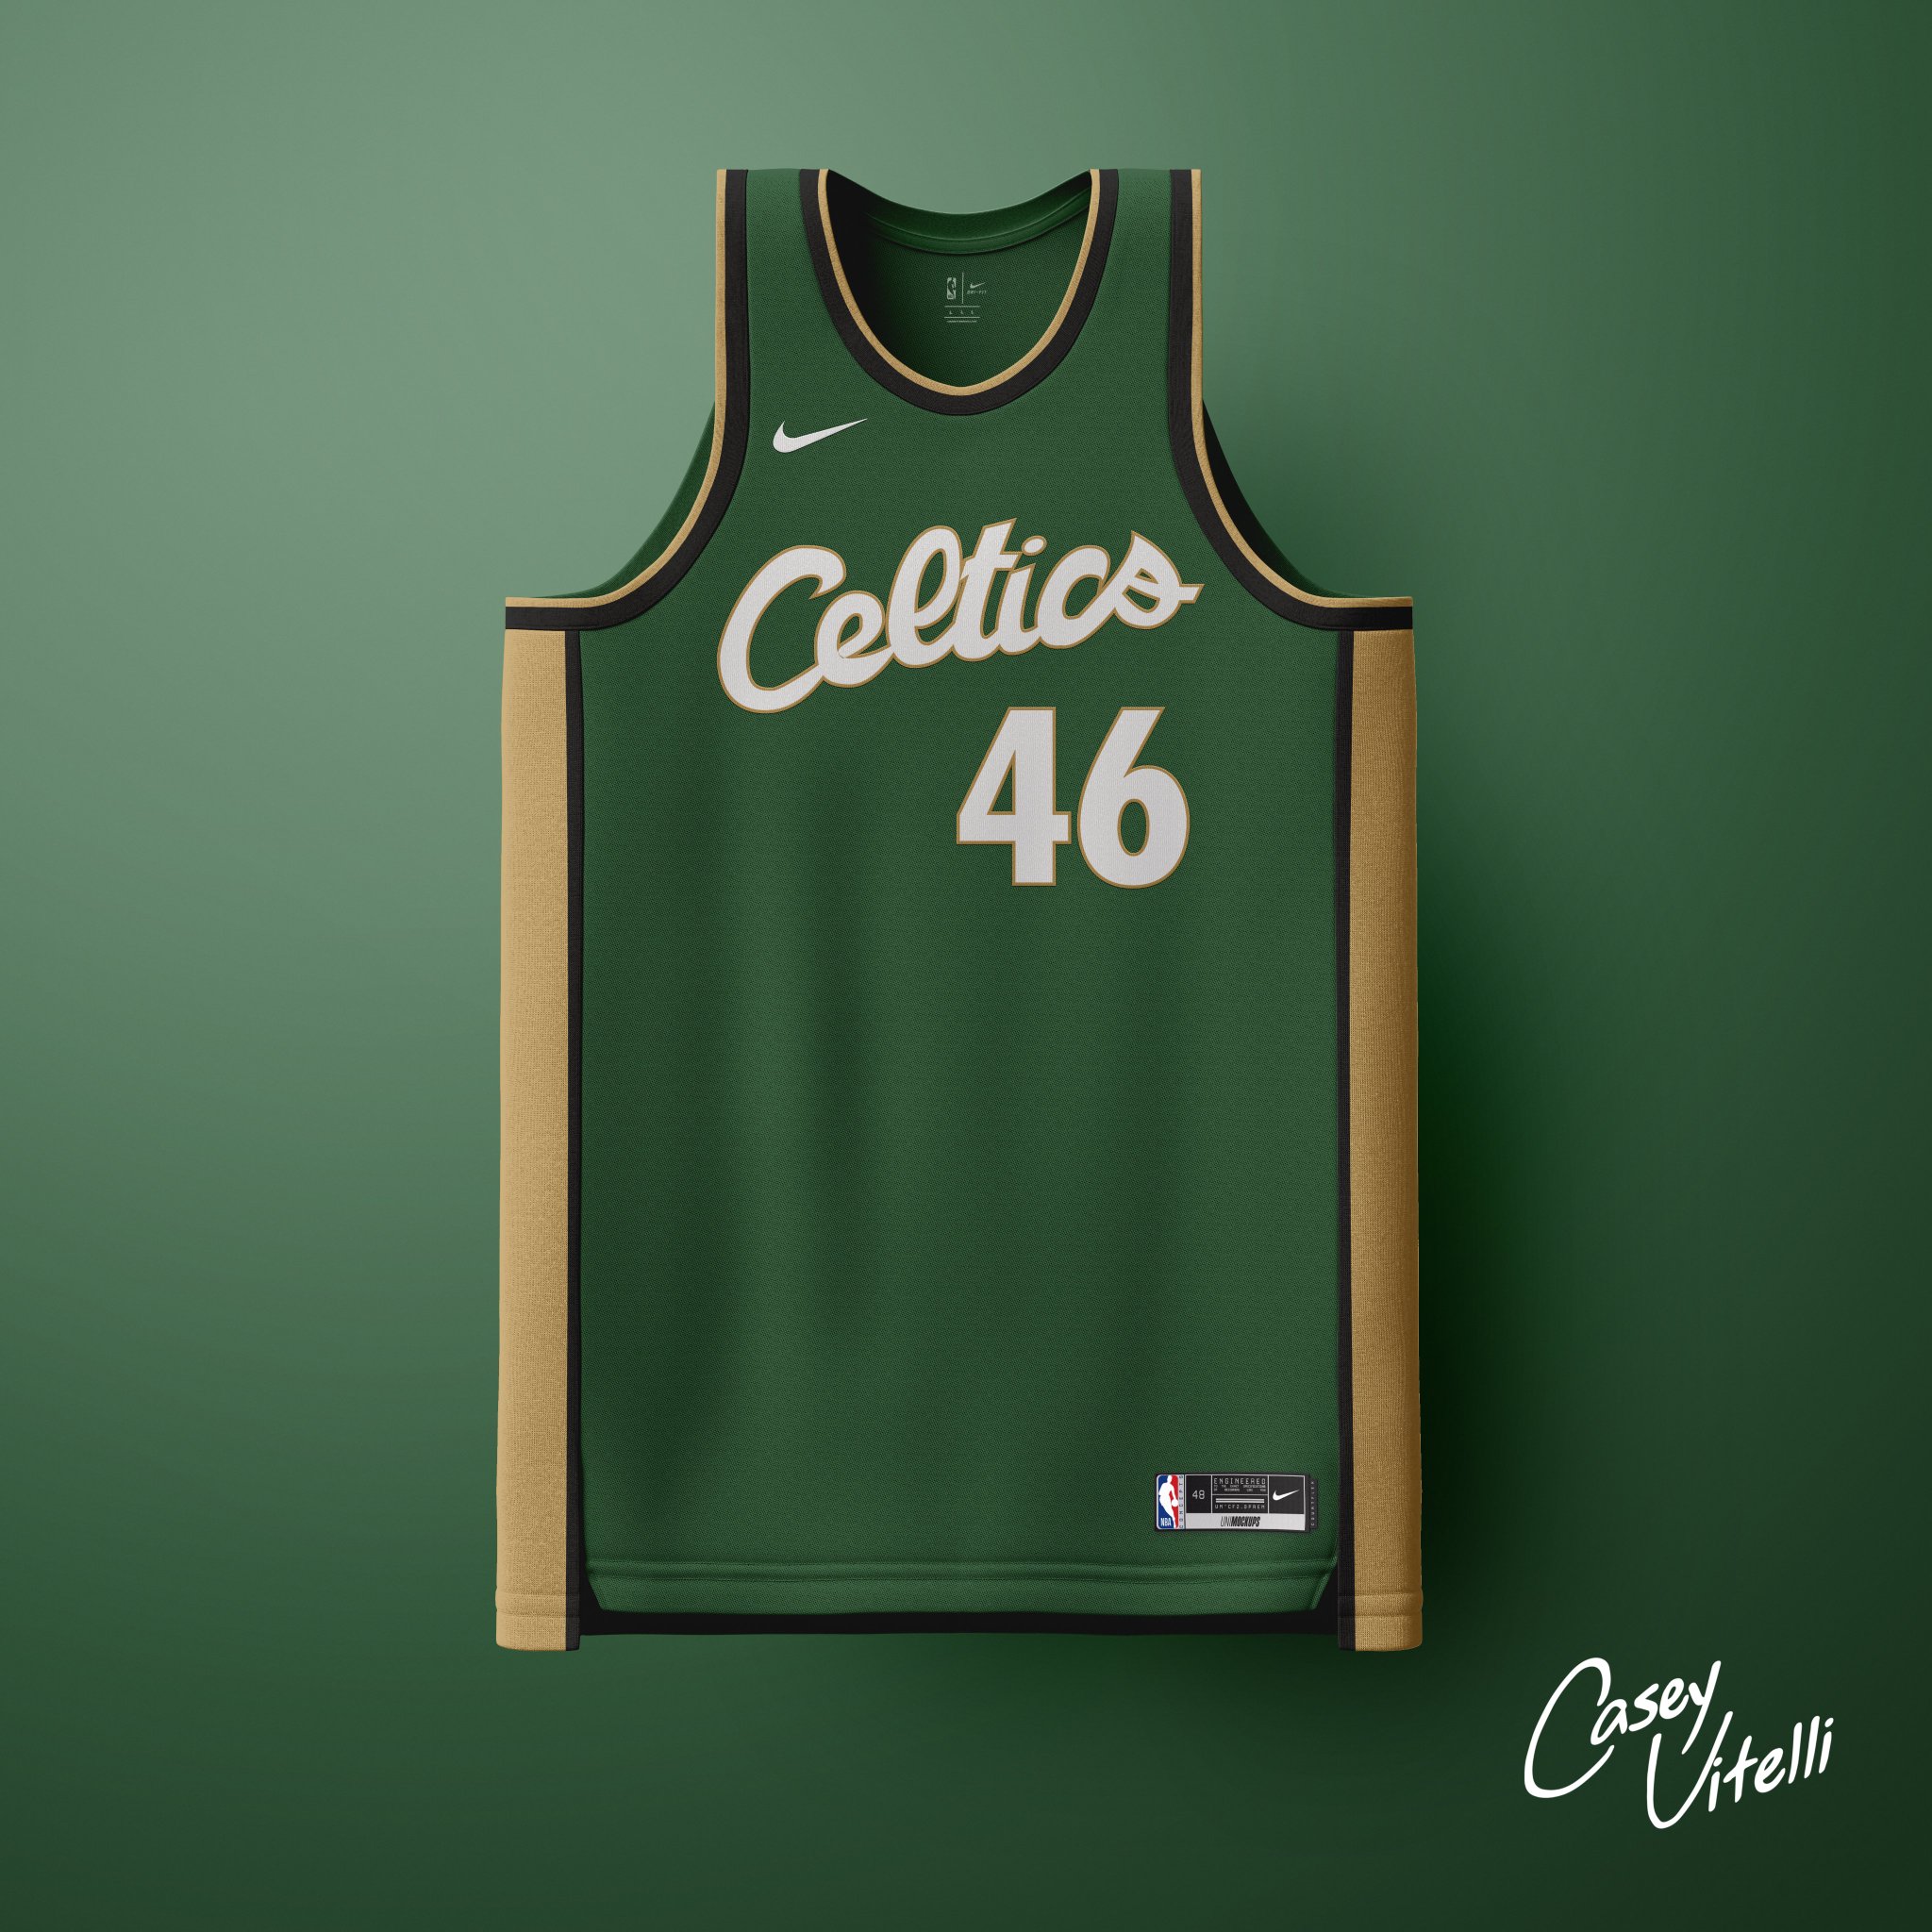 Casey Vitelli on X: NBA Rebrand Project - Boston Celtics Earned @celtics  #BleedGreen  / X